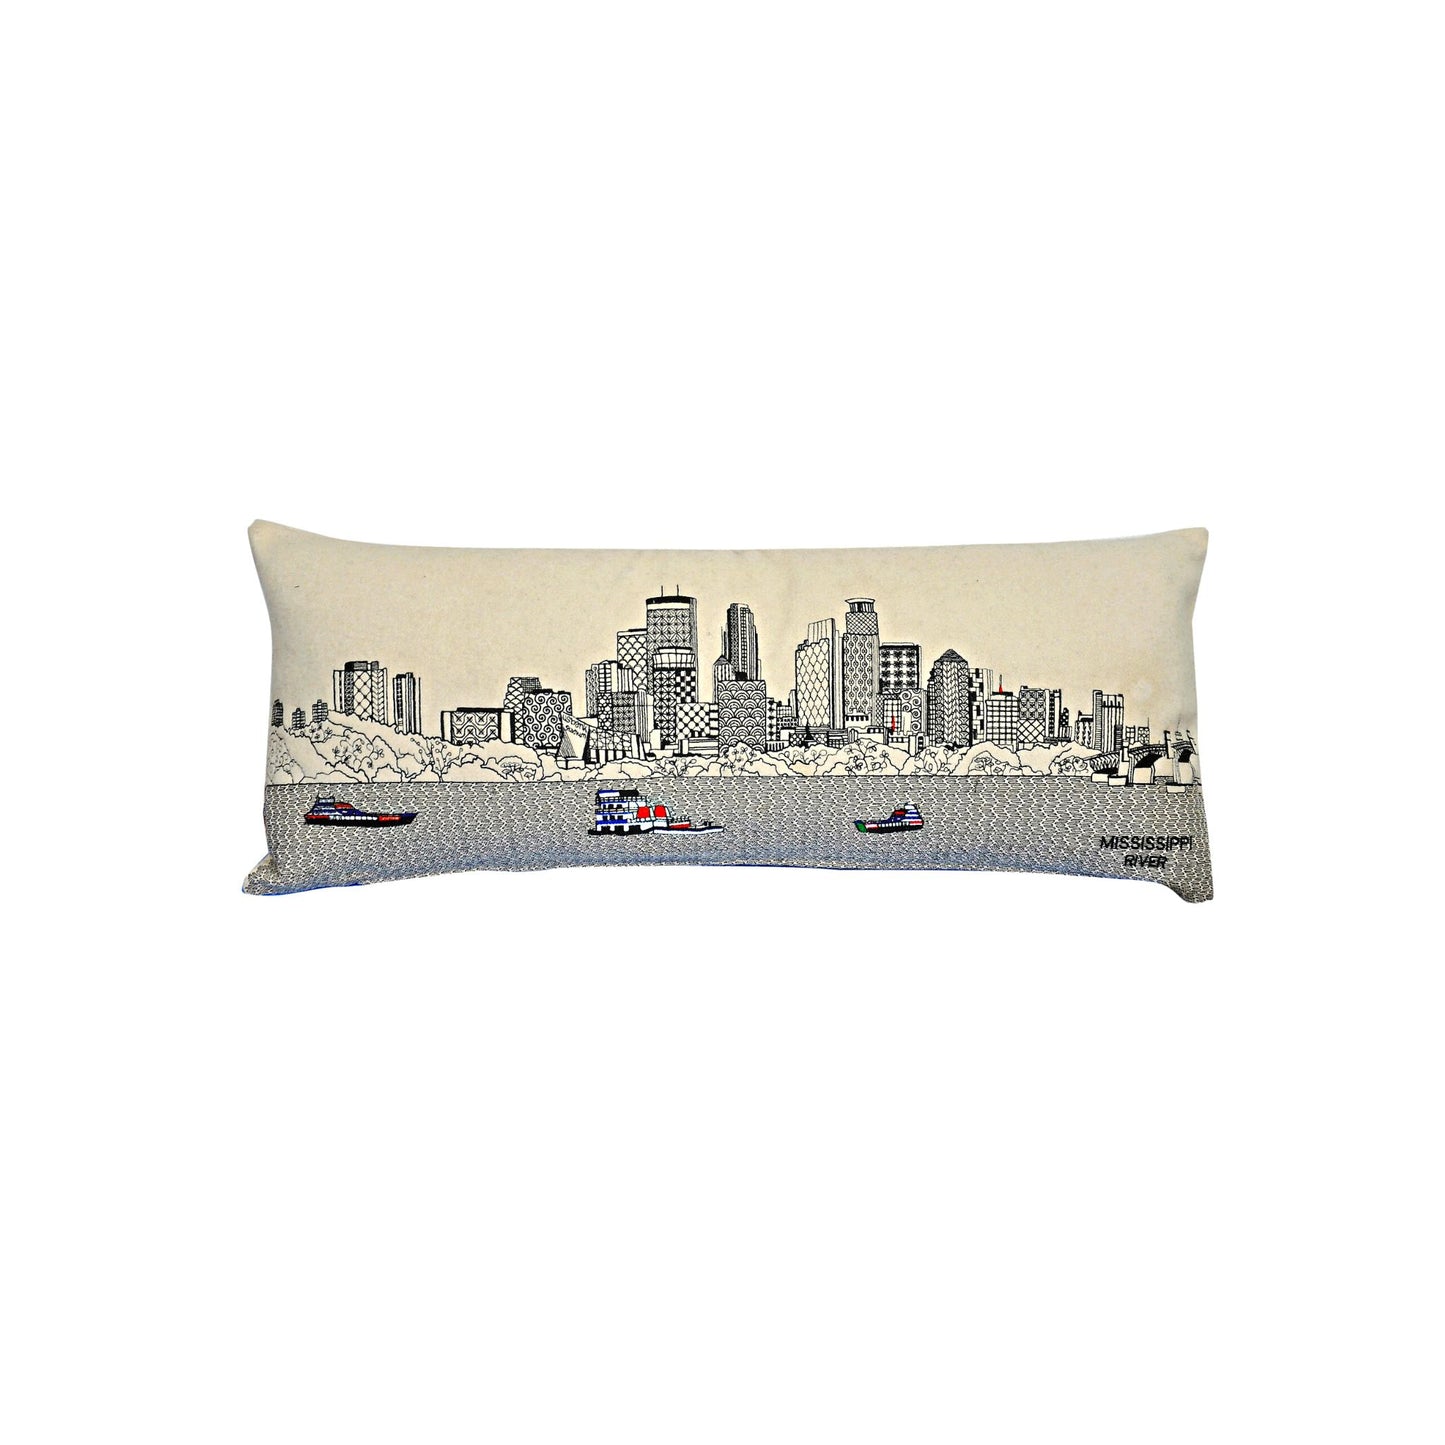 Minneapolis Queen Day Pillow